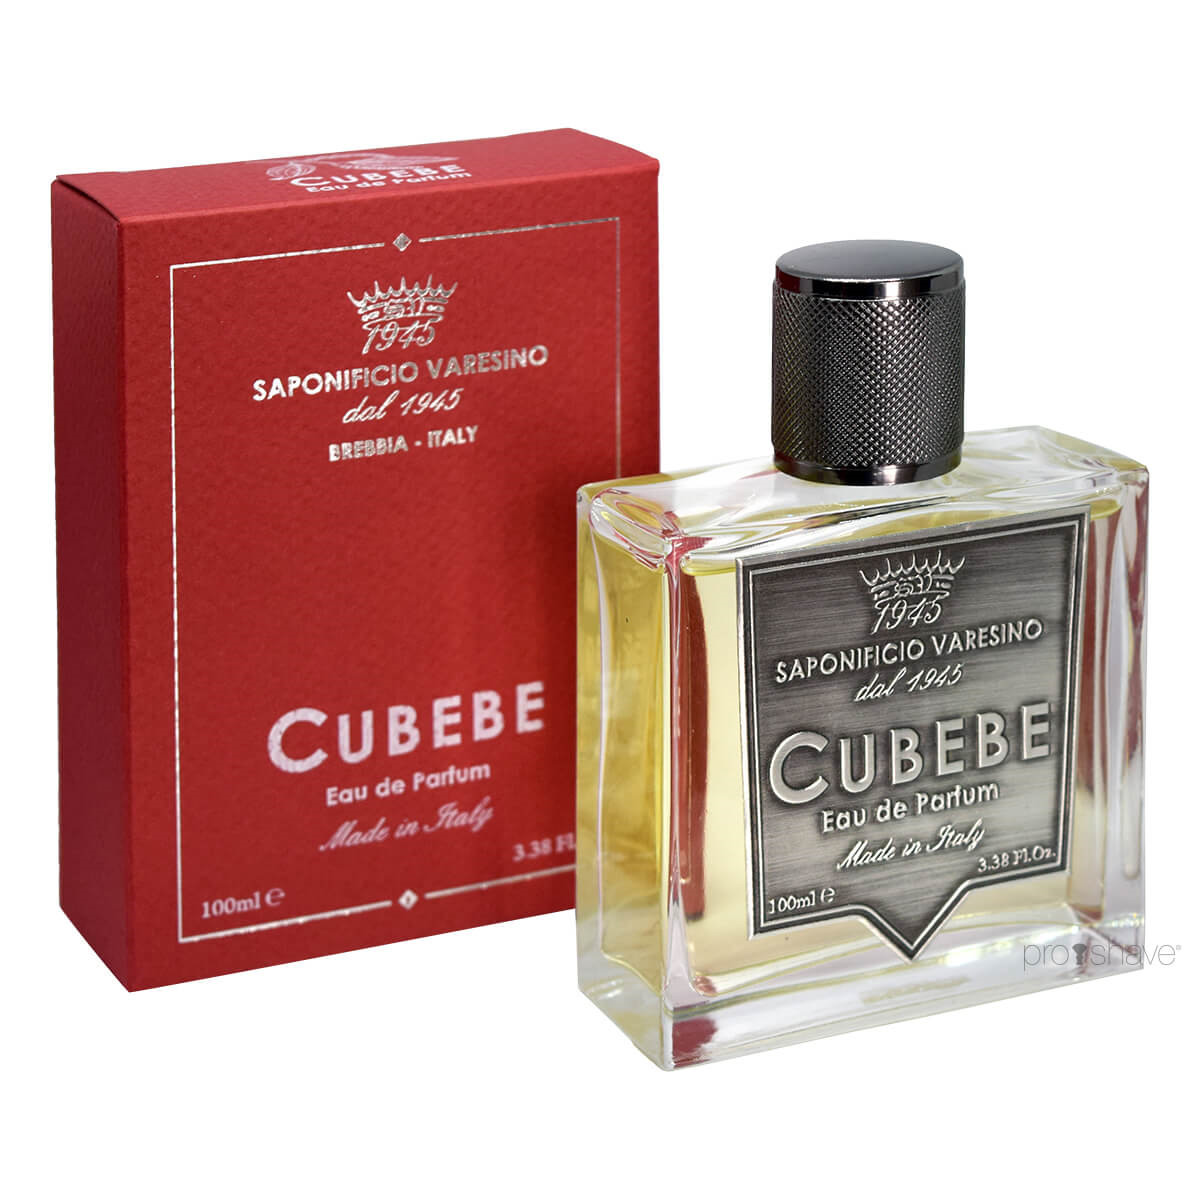 Billede af Saponificio Varesino Eau de Parfum, Cubebe, 100 ml.